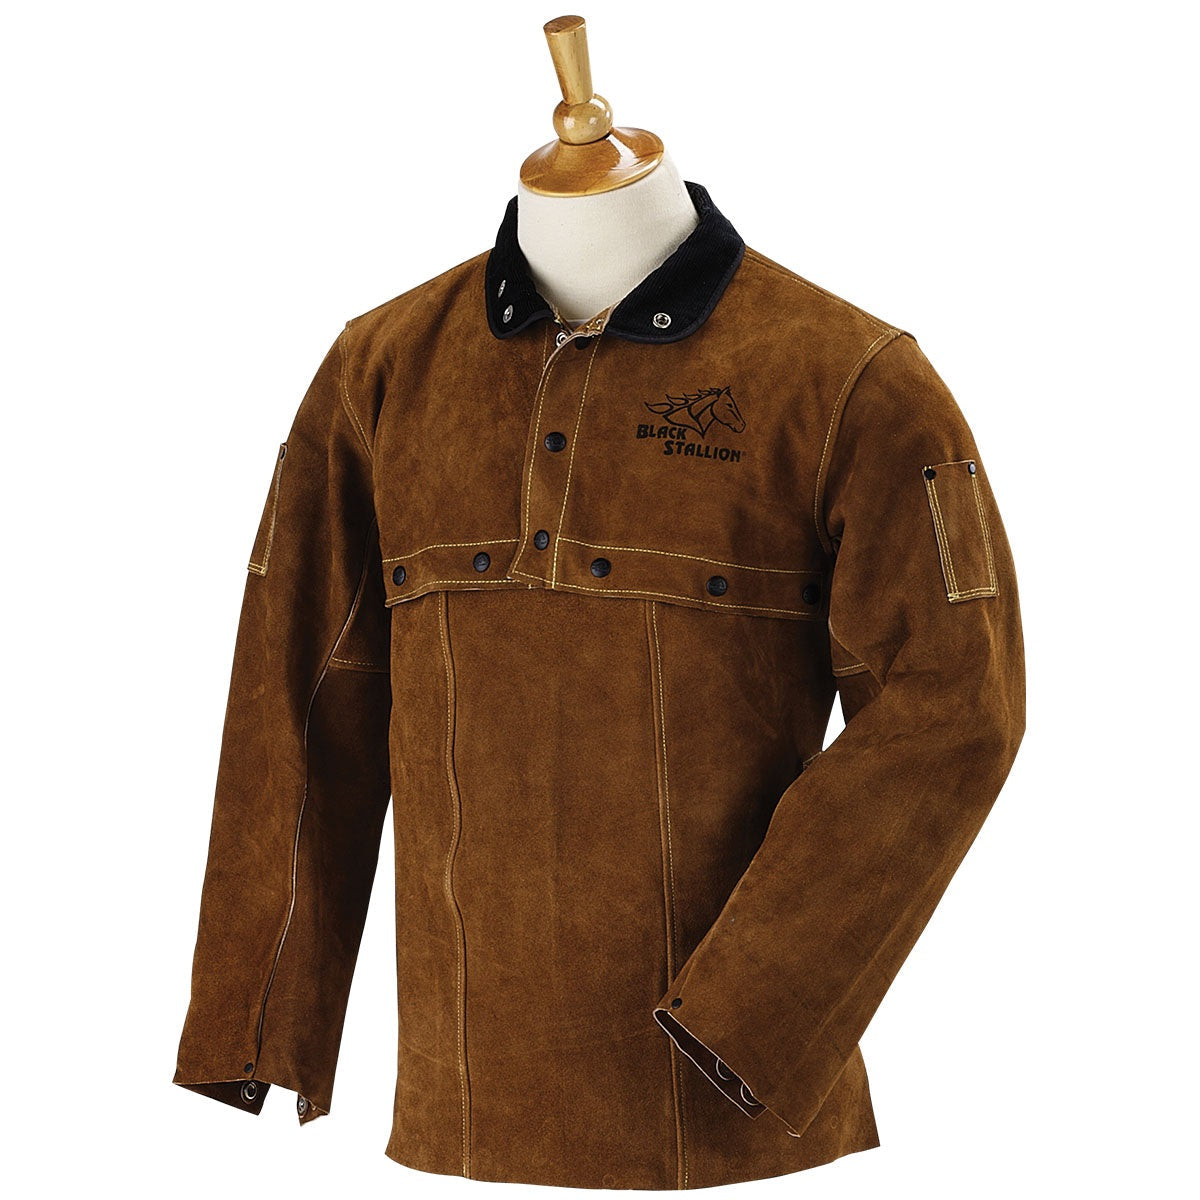 Revco Black Stallion AR/FR Blue Plaid Cotton Work Shirt (WF2110-PB)